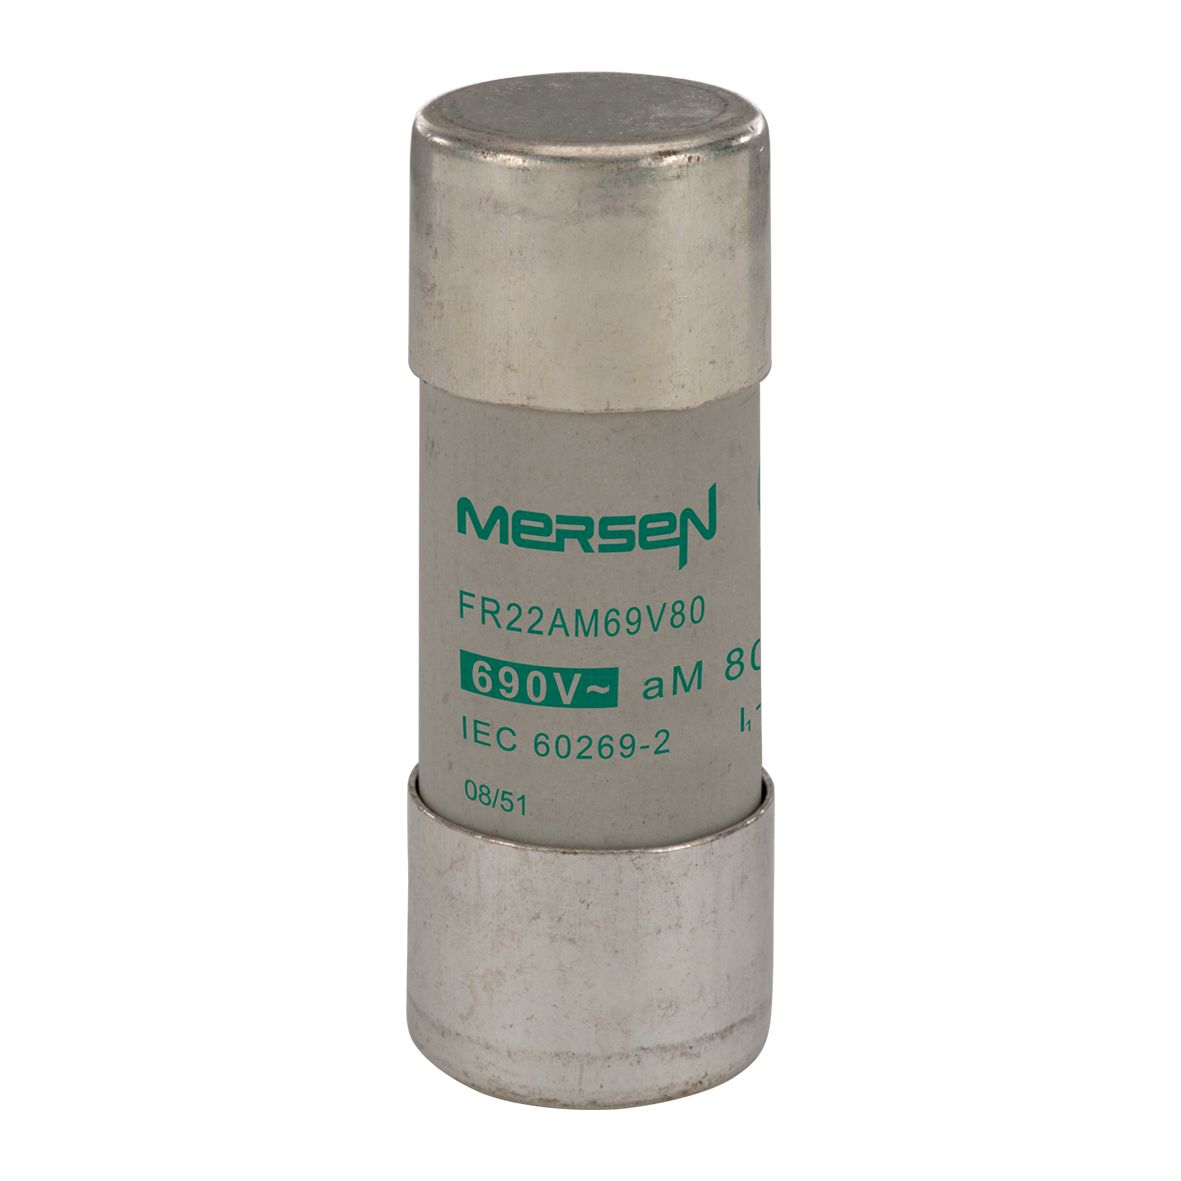 H216667 - Cylindrical fuse-link aM 690VAC 22.2x58, 80A